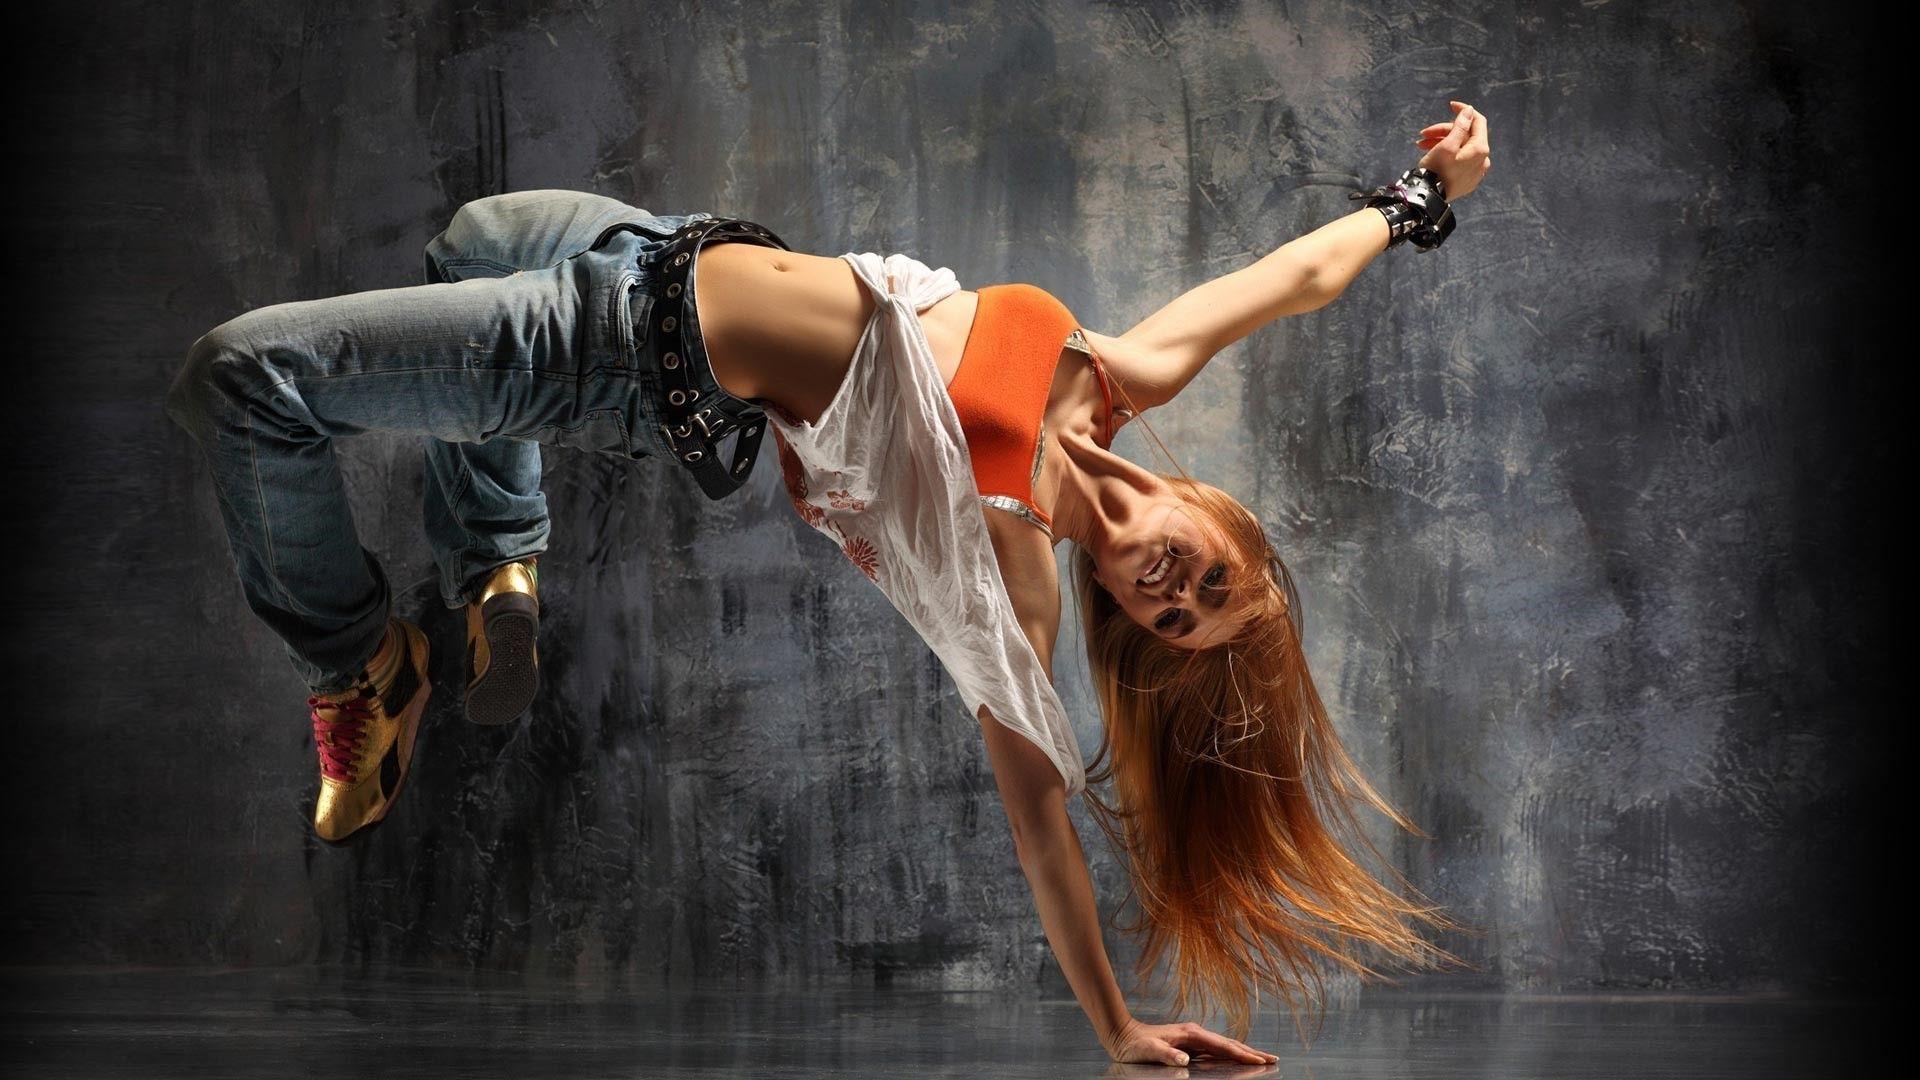 Super Dancing by Girl Wallpaper HD Wallpaper. Street Dance